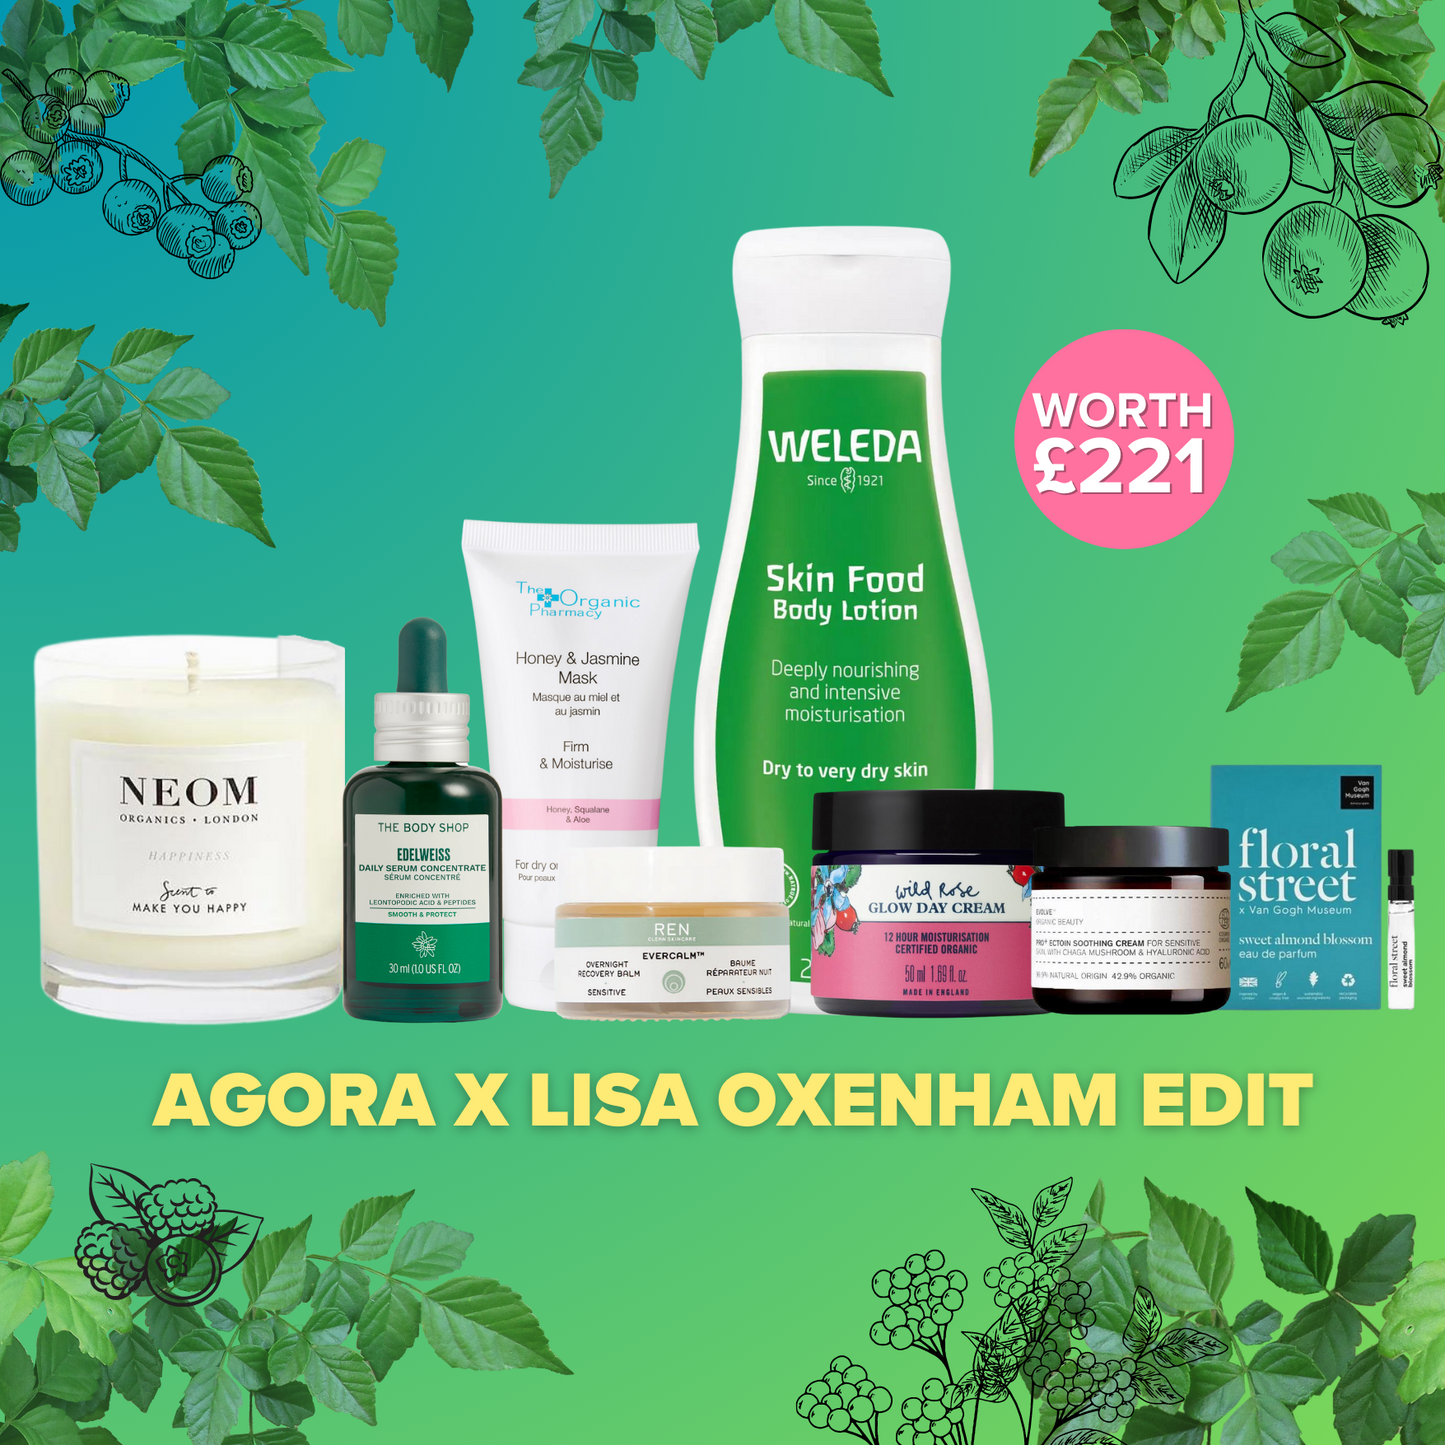 AGORA X Lisa Oxenham Edit Exclusive (WORTH £221)